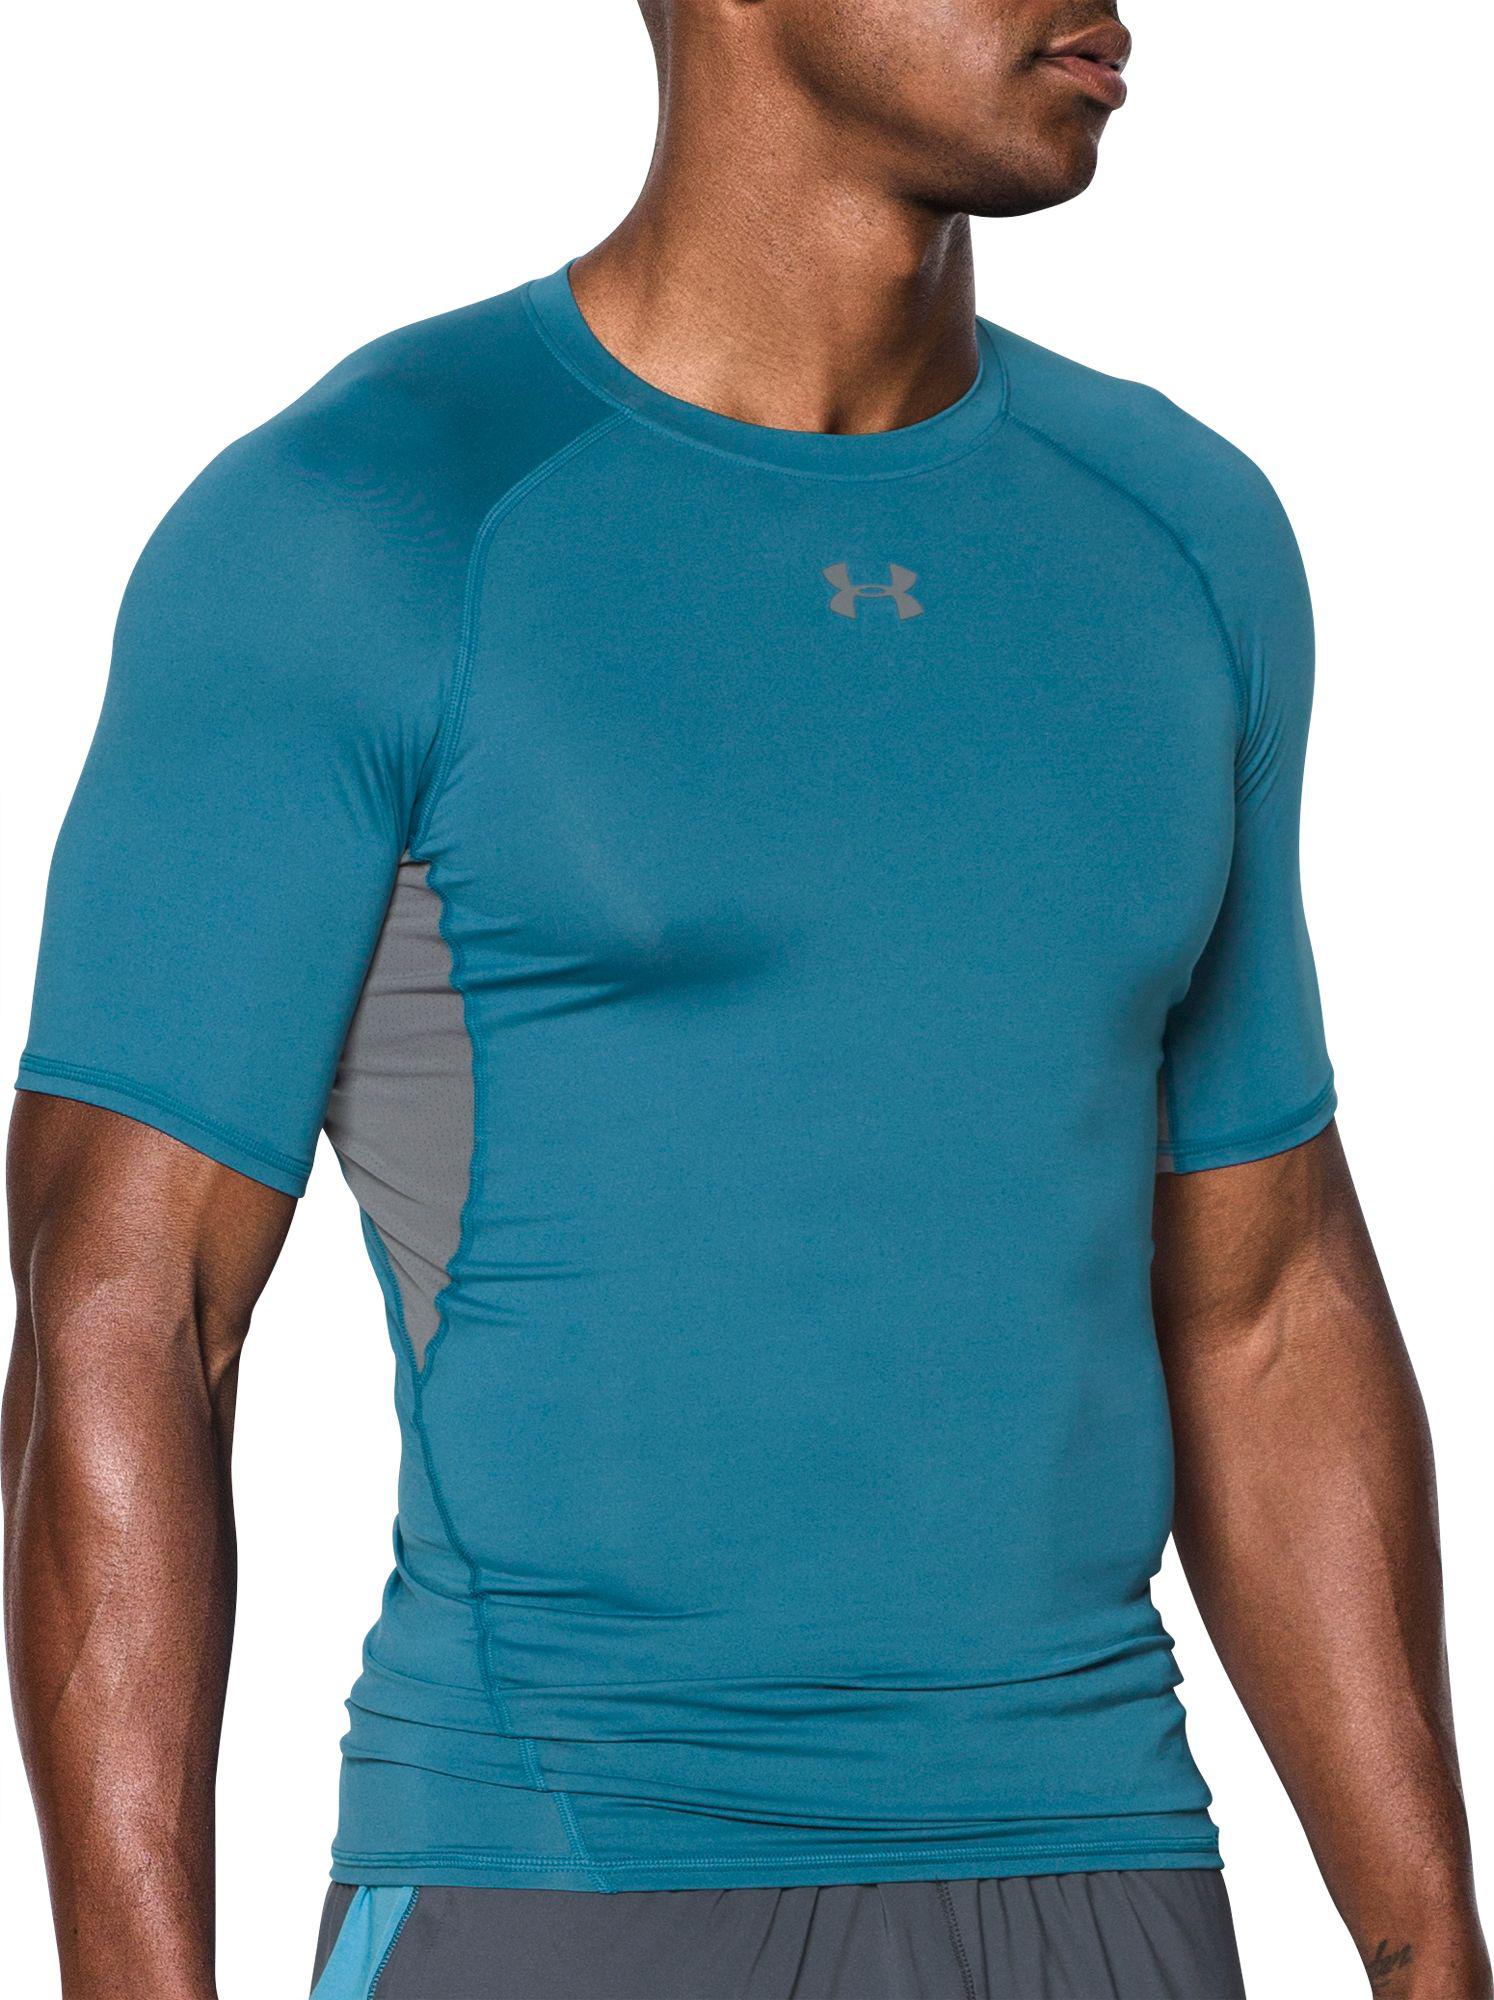 Under Armour Heatgear Armour T-shirt in Blue for Men - Lyst